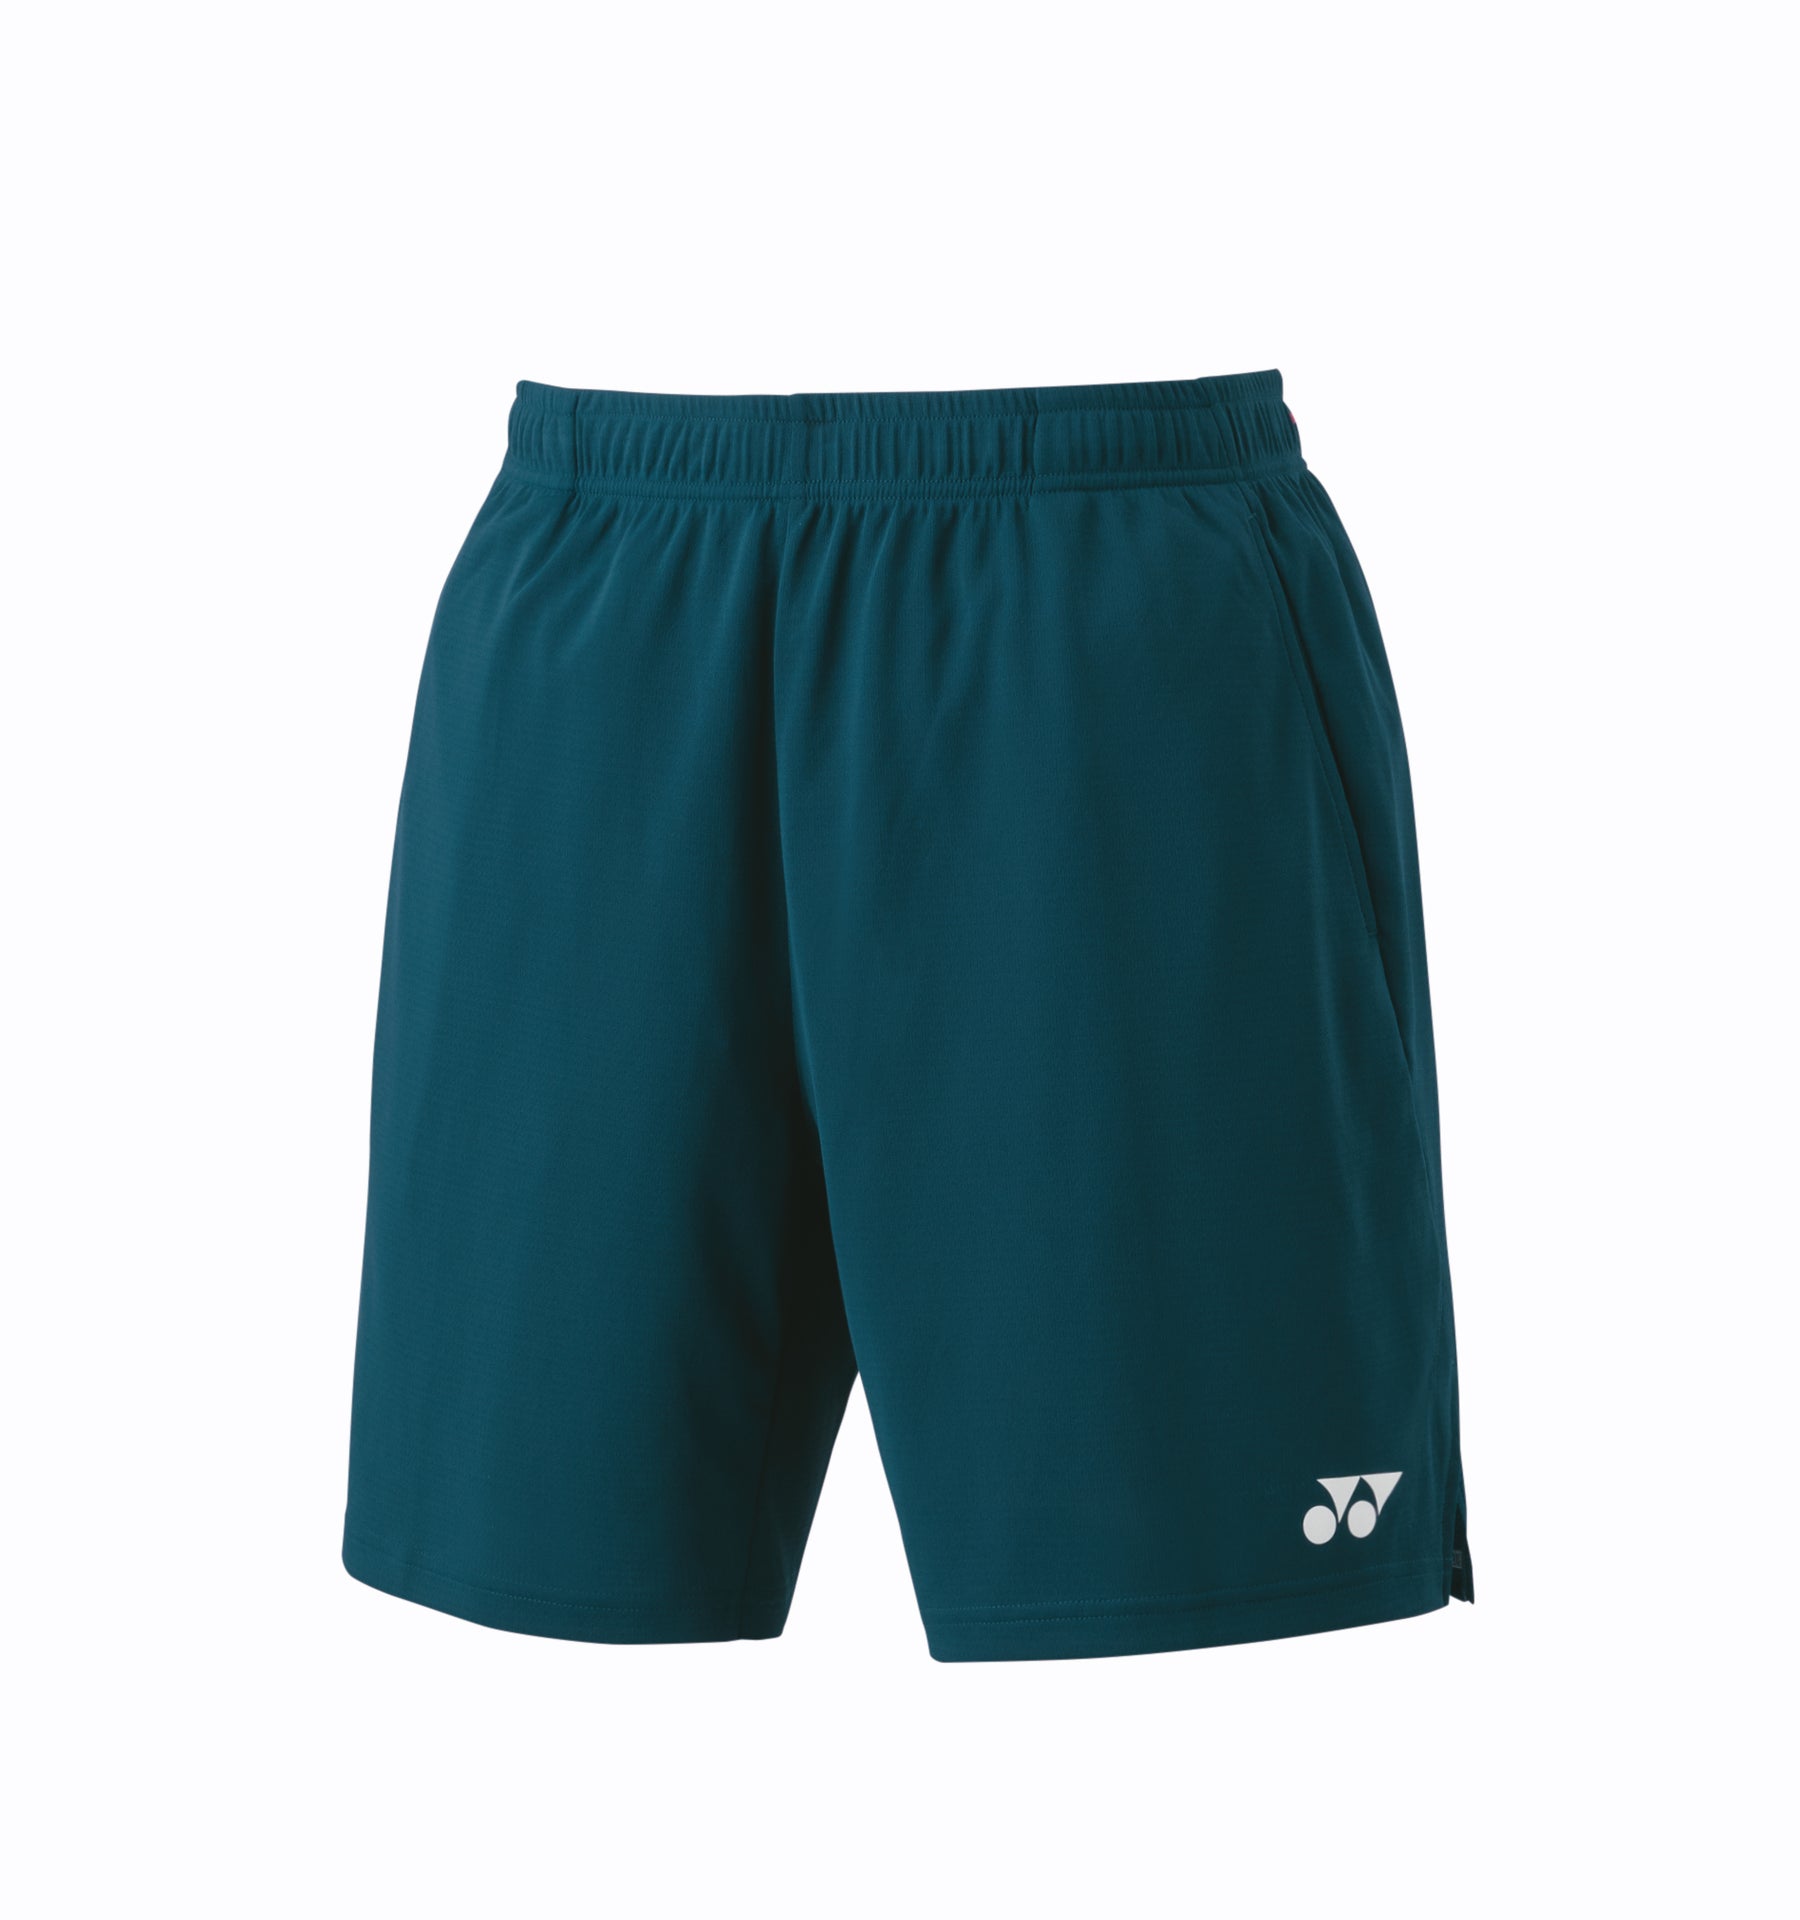 Yonex 15170 Shorts Mens (Black)